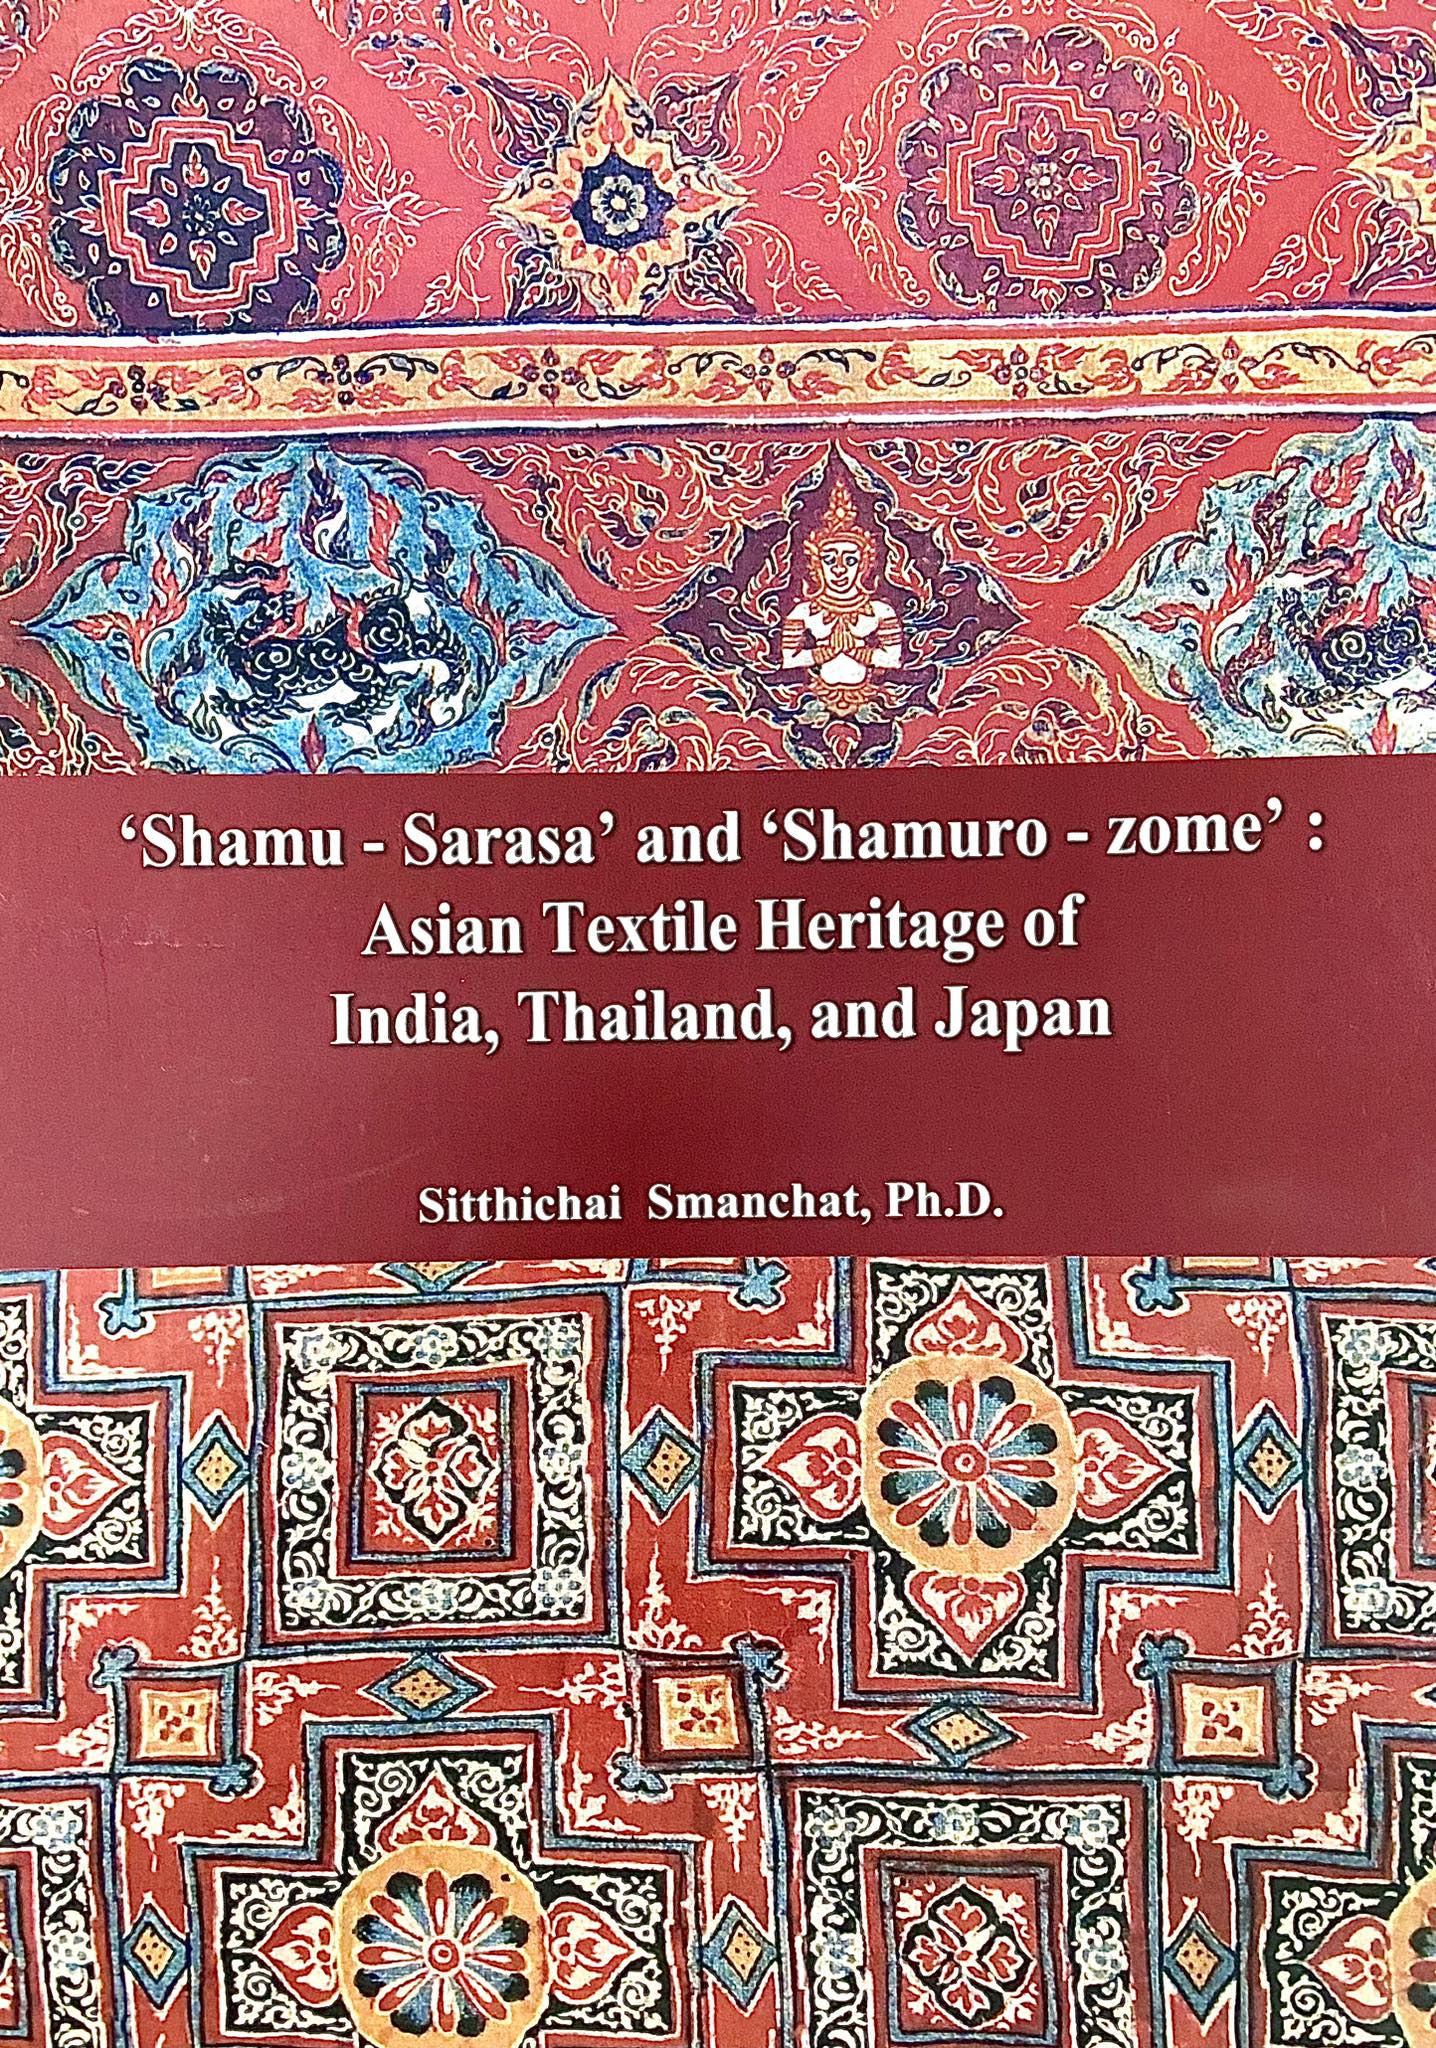 Shamu-Sarasa' and 'Shamuro-zome' : Asian textile heritage of India, Thailand, and Japan